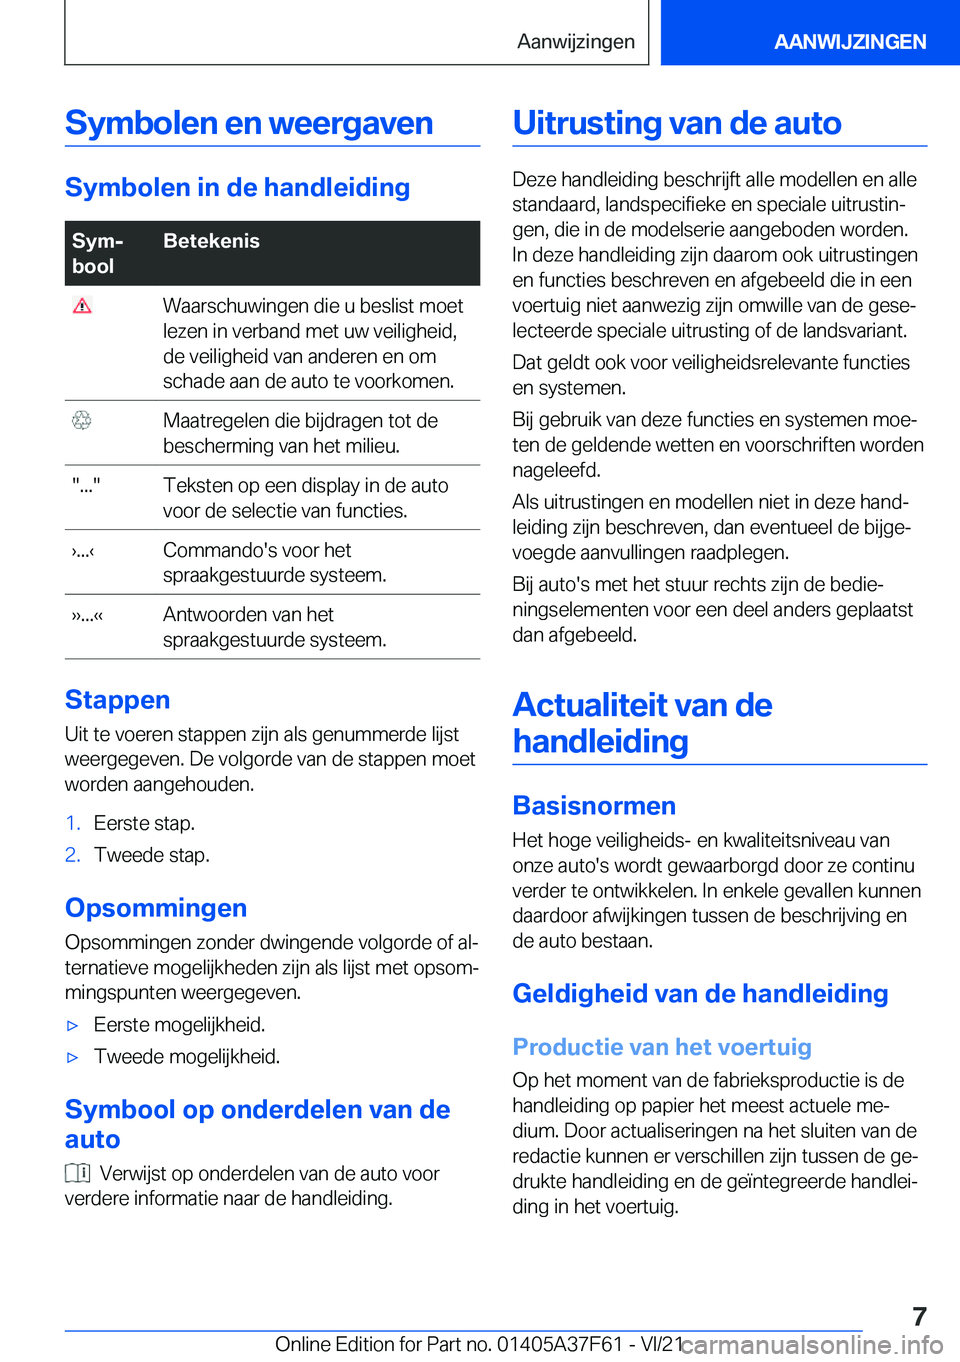 BMW M3 2022  Instructieboekjes (in Dutch) �S�y�m�b�o�l�e�n��e�n��w�e�e�r�g�a�v�e�n
�S�y�m�b�o�l�e�n��i�n��d�e��h�a�n�d�l�e�i�d�i�n�g
�S�y�mj
�b�o�o�l�B�e�t�e�k�e�n�i�s��W�a�a�r�s�c�h�u�w�i�n�g�e�n��d�i�e��u��b�e�s�l�i�s�t��m�o�e�t
